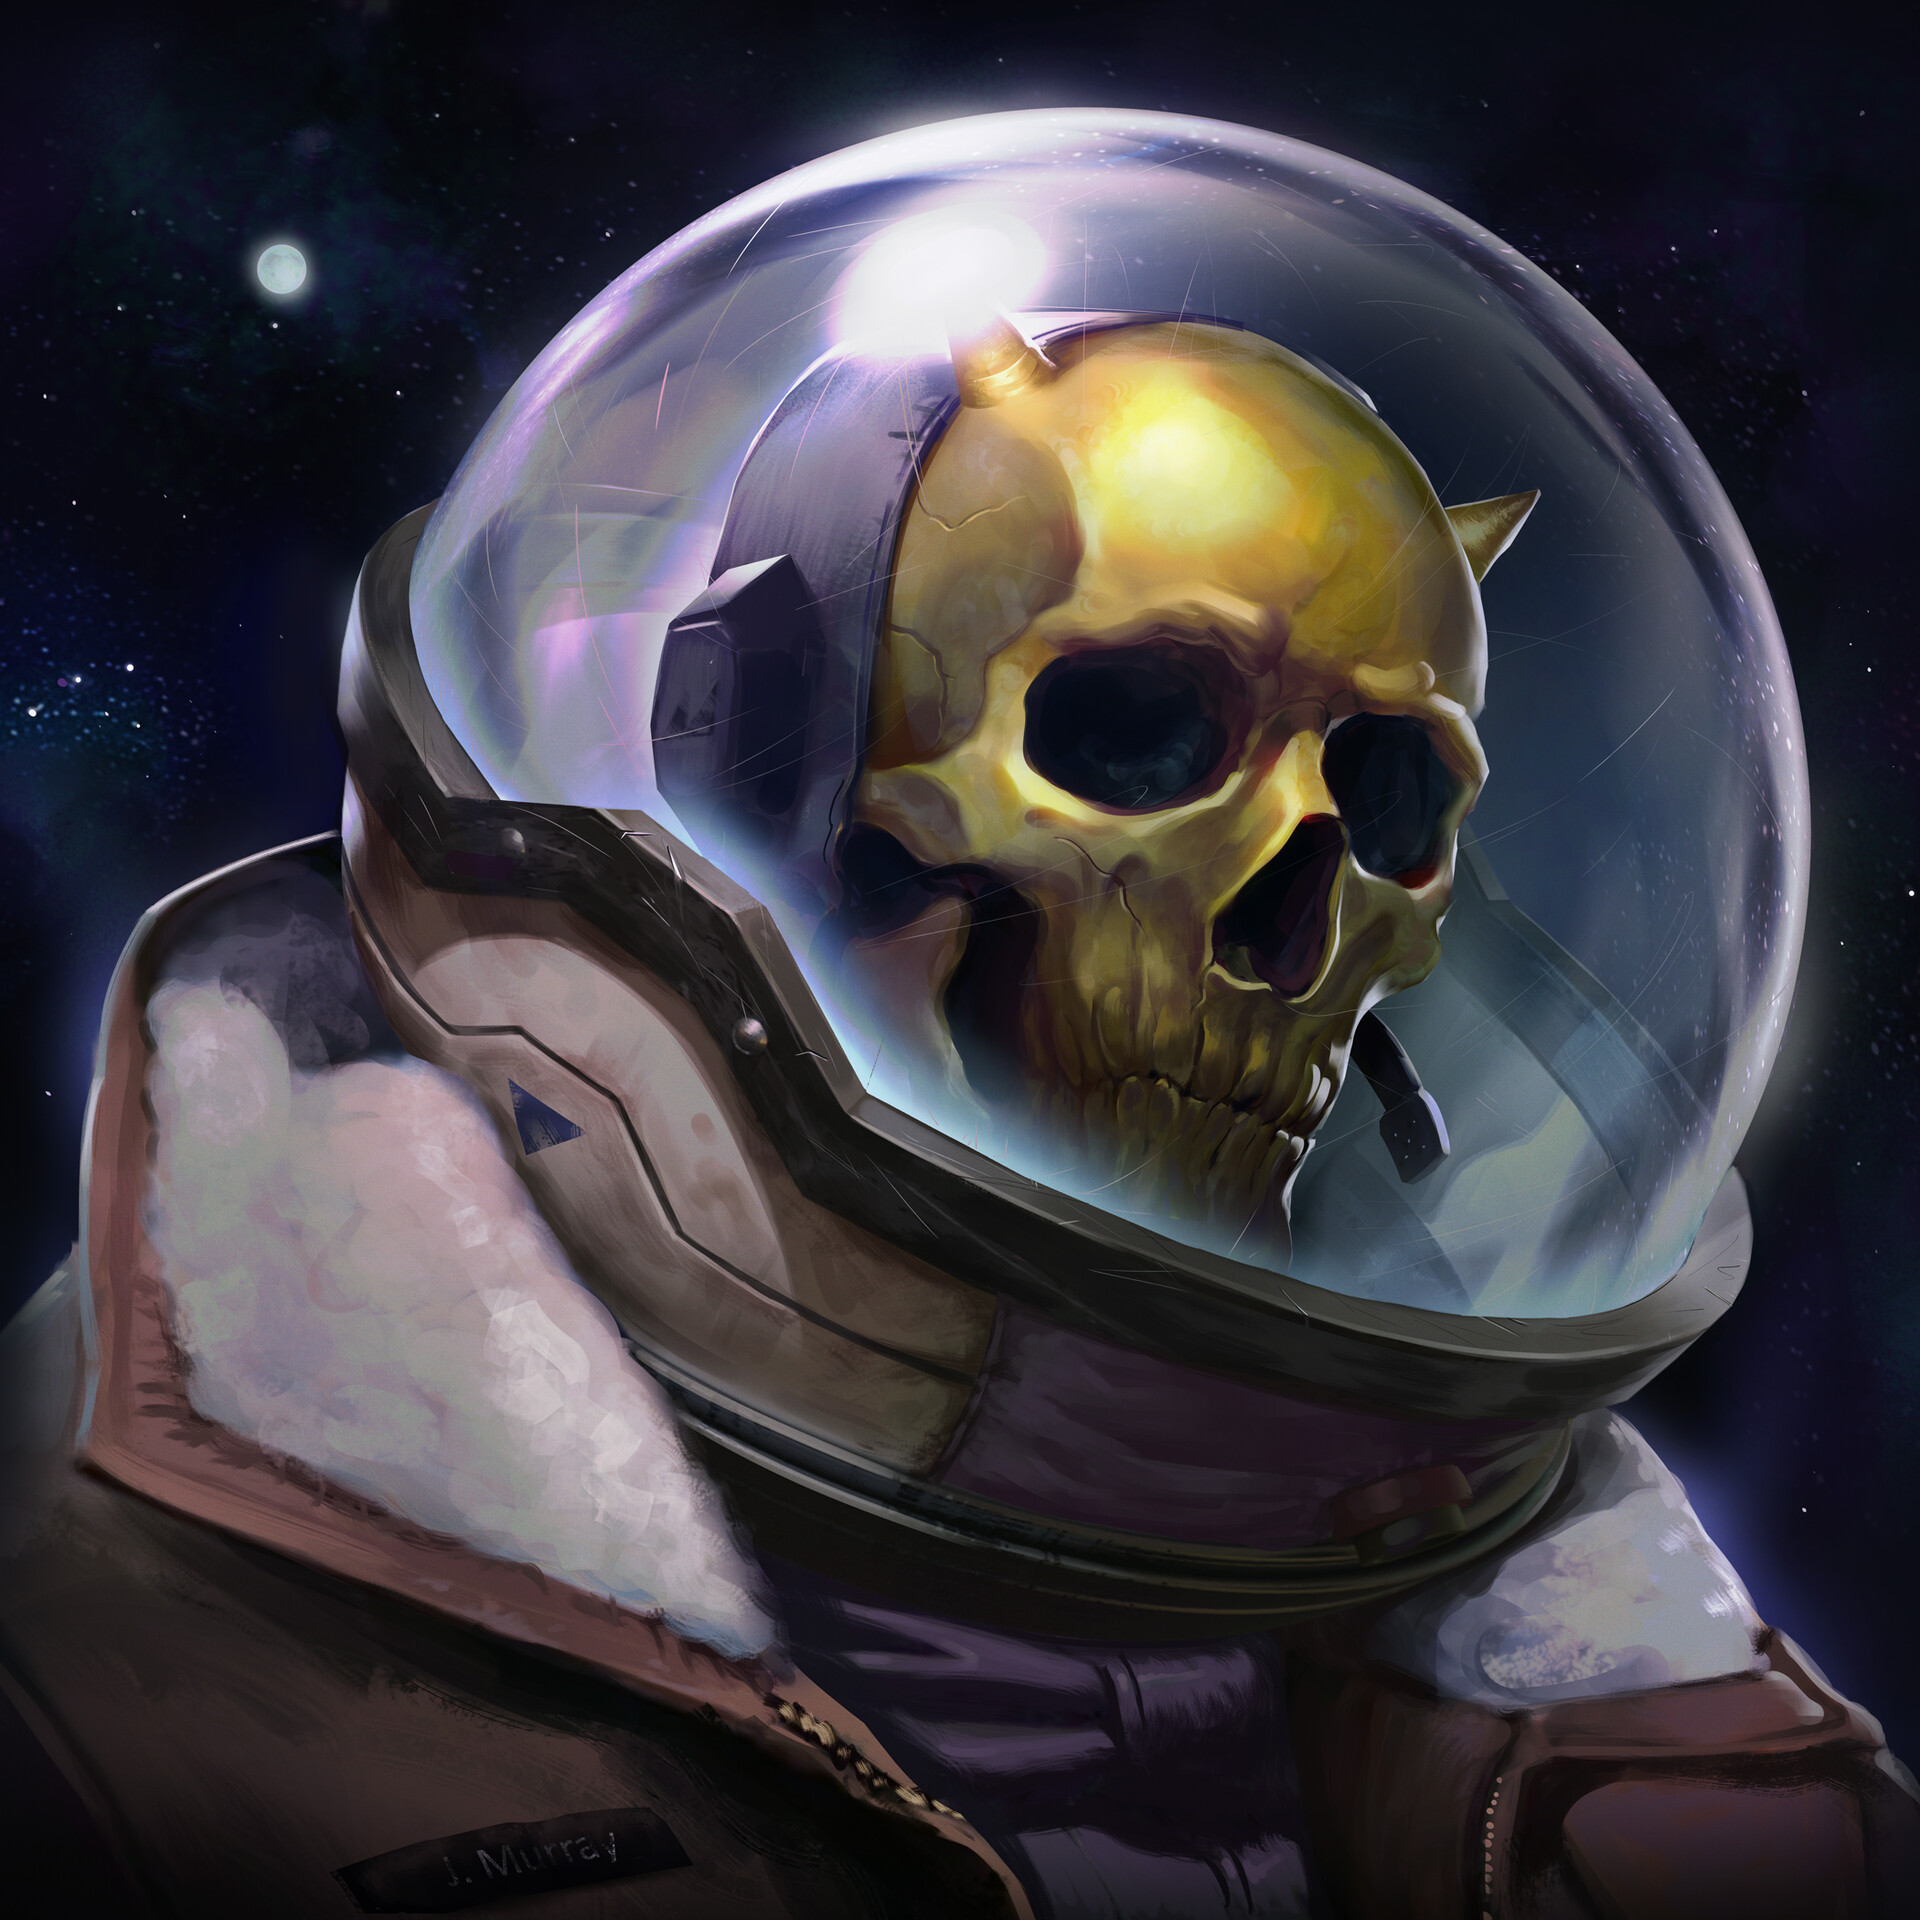 General 1920x1920 digital art artwork illustration skull astronaut spacesuit gold science fiction character design  portrait horns space stars